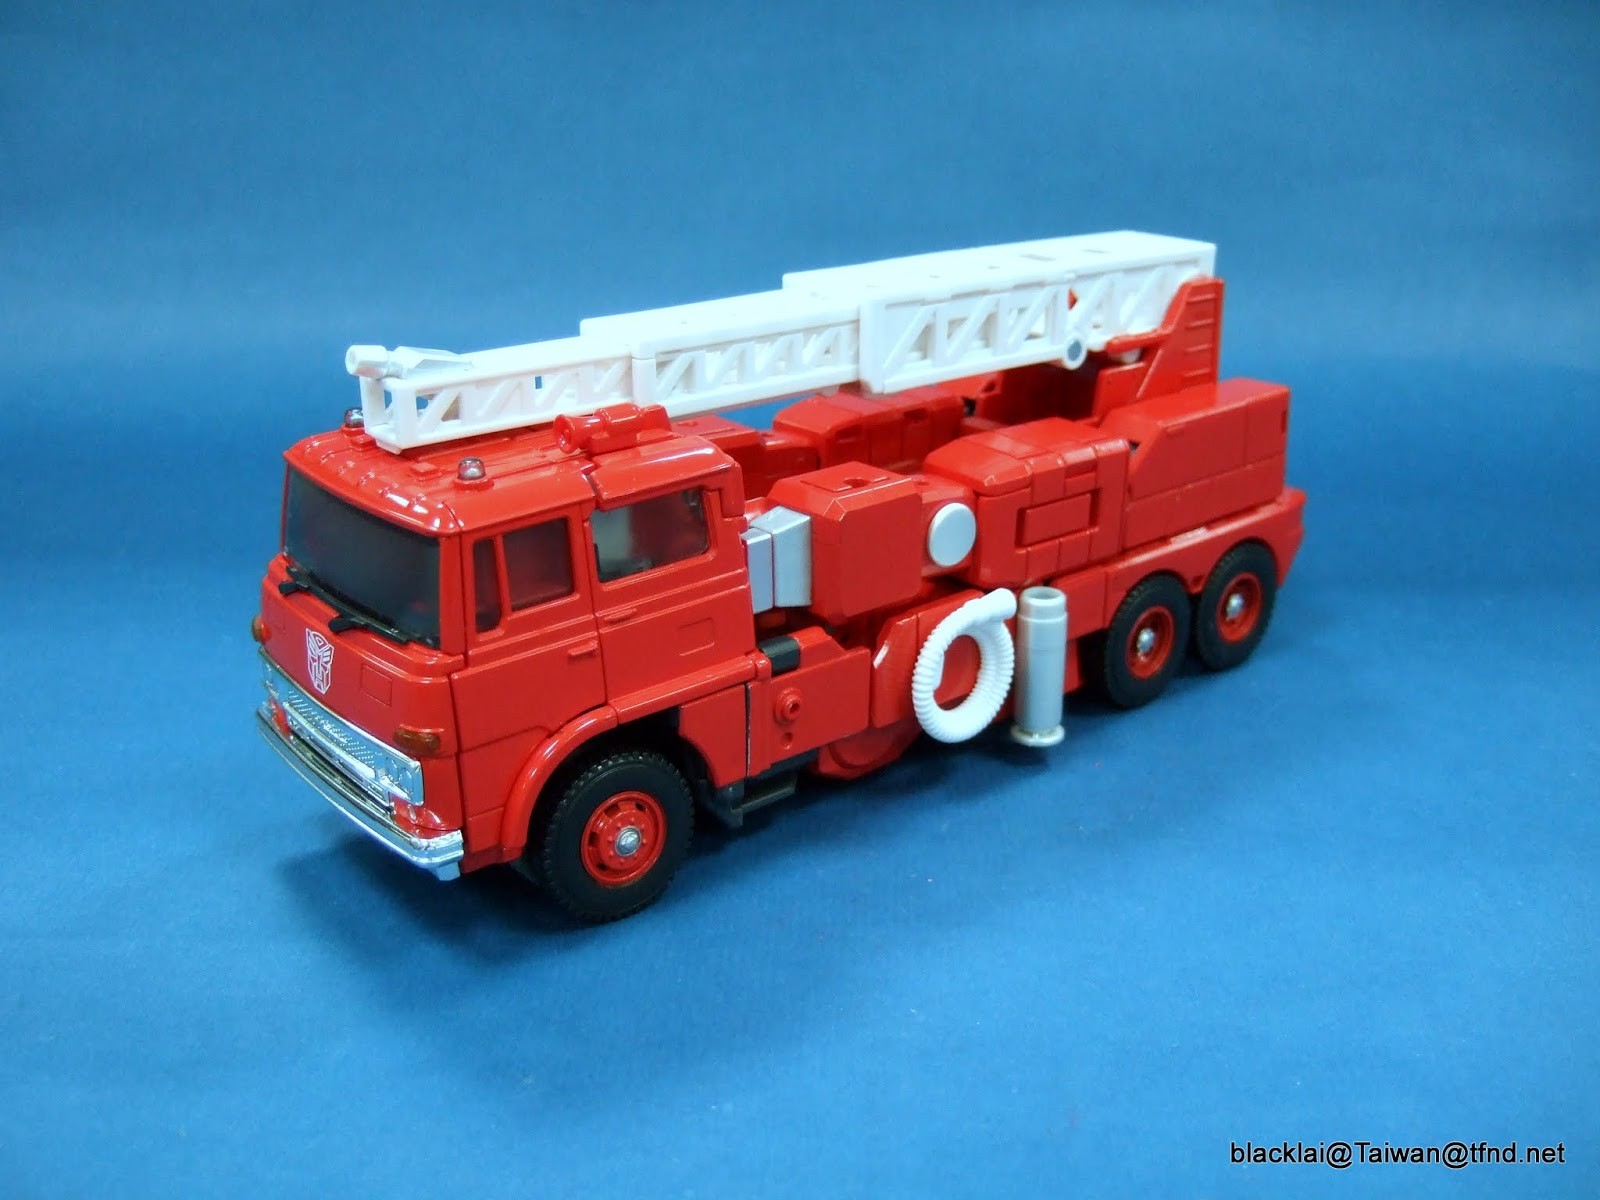 fire engine transformer toy